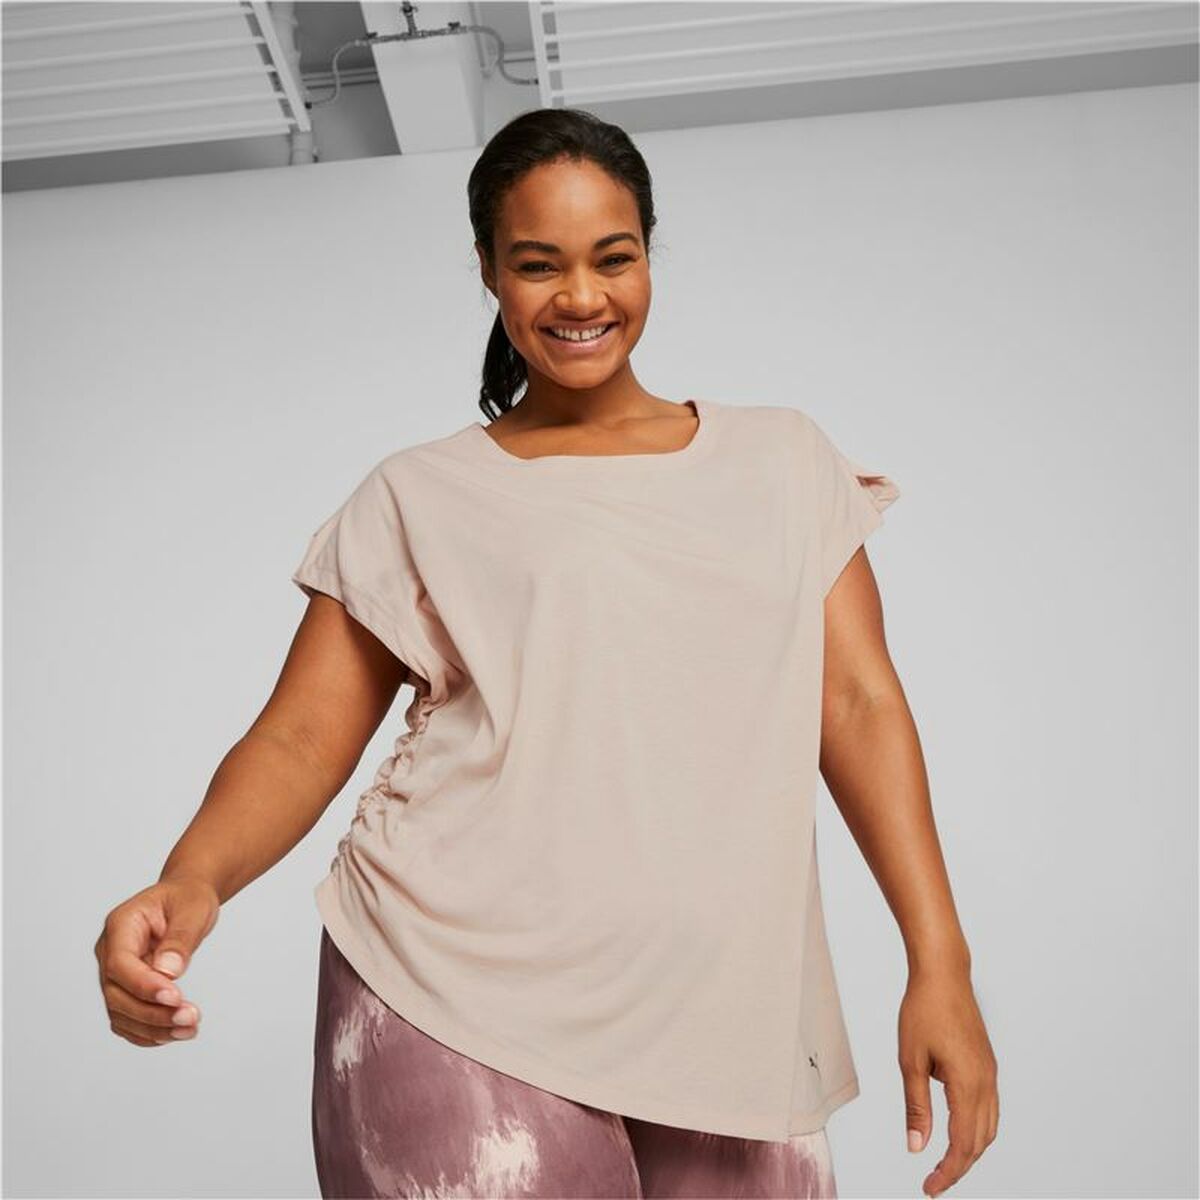 Women’s Short Sleeve T-Shirt Puma Studio Foundation Beige Light Pink